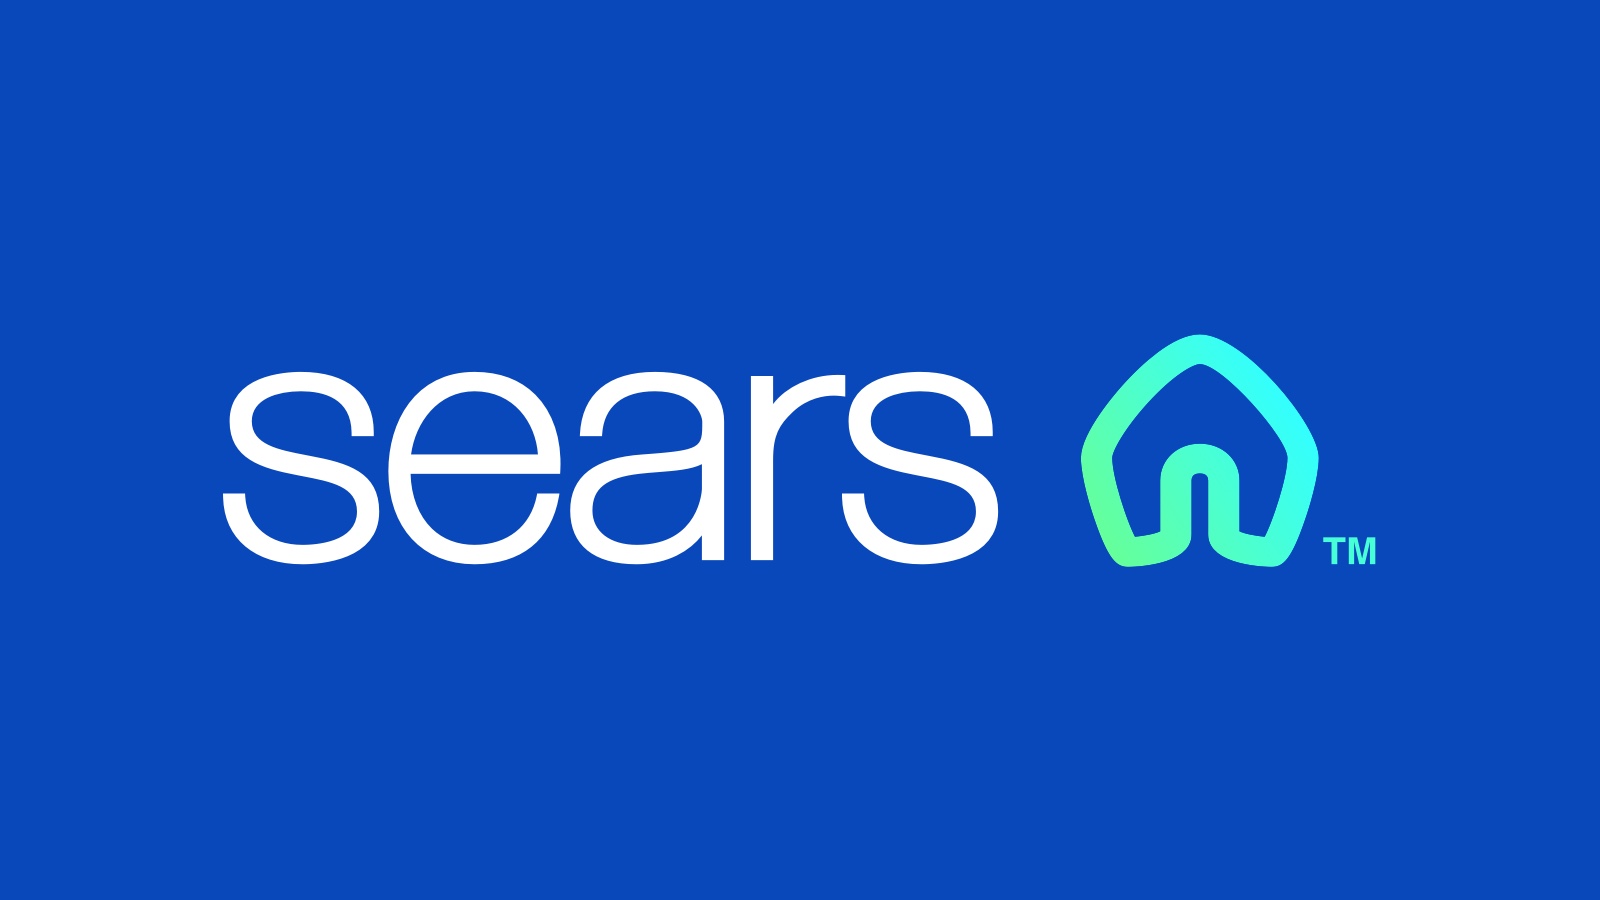 (c) Sears.com